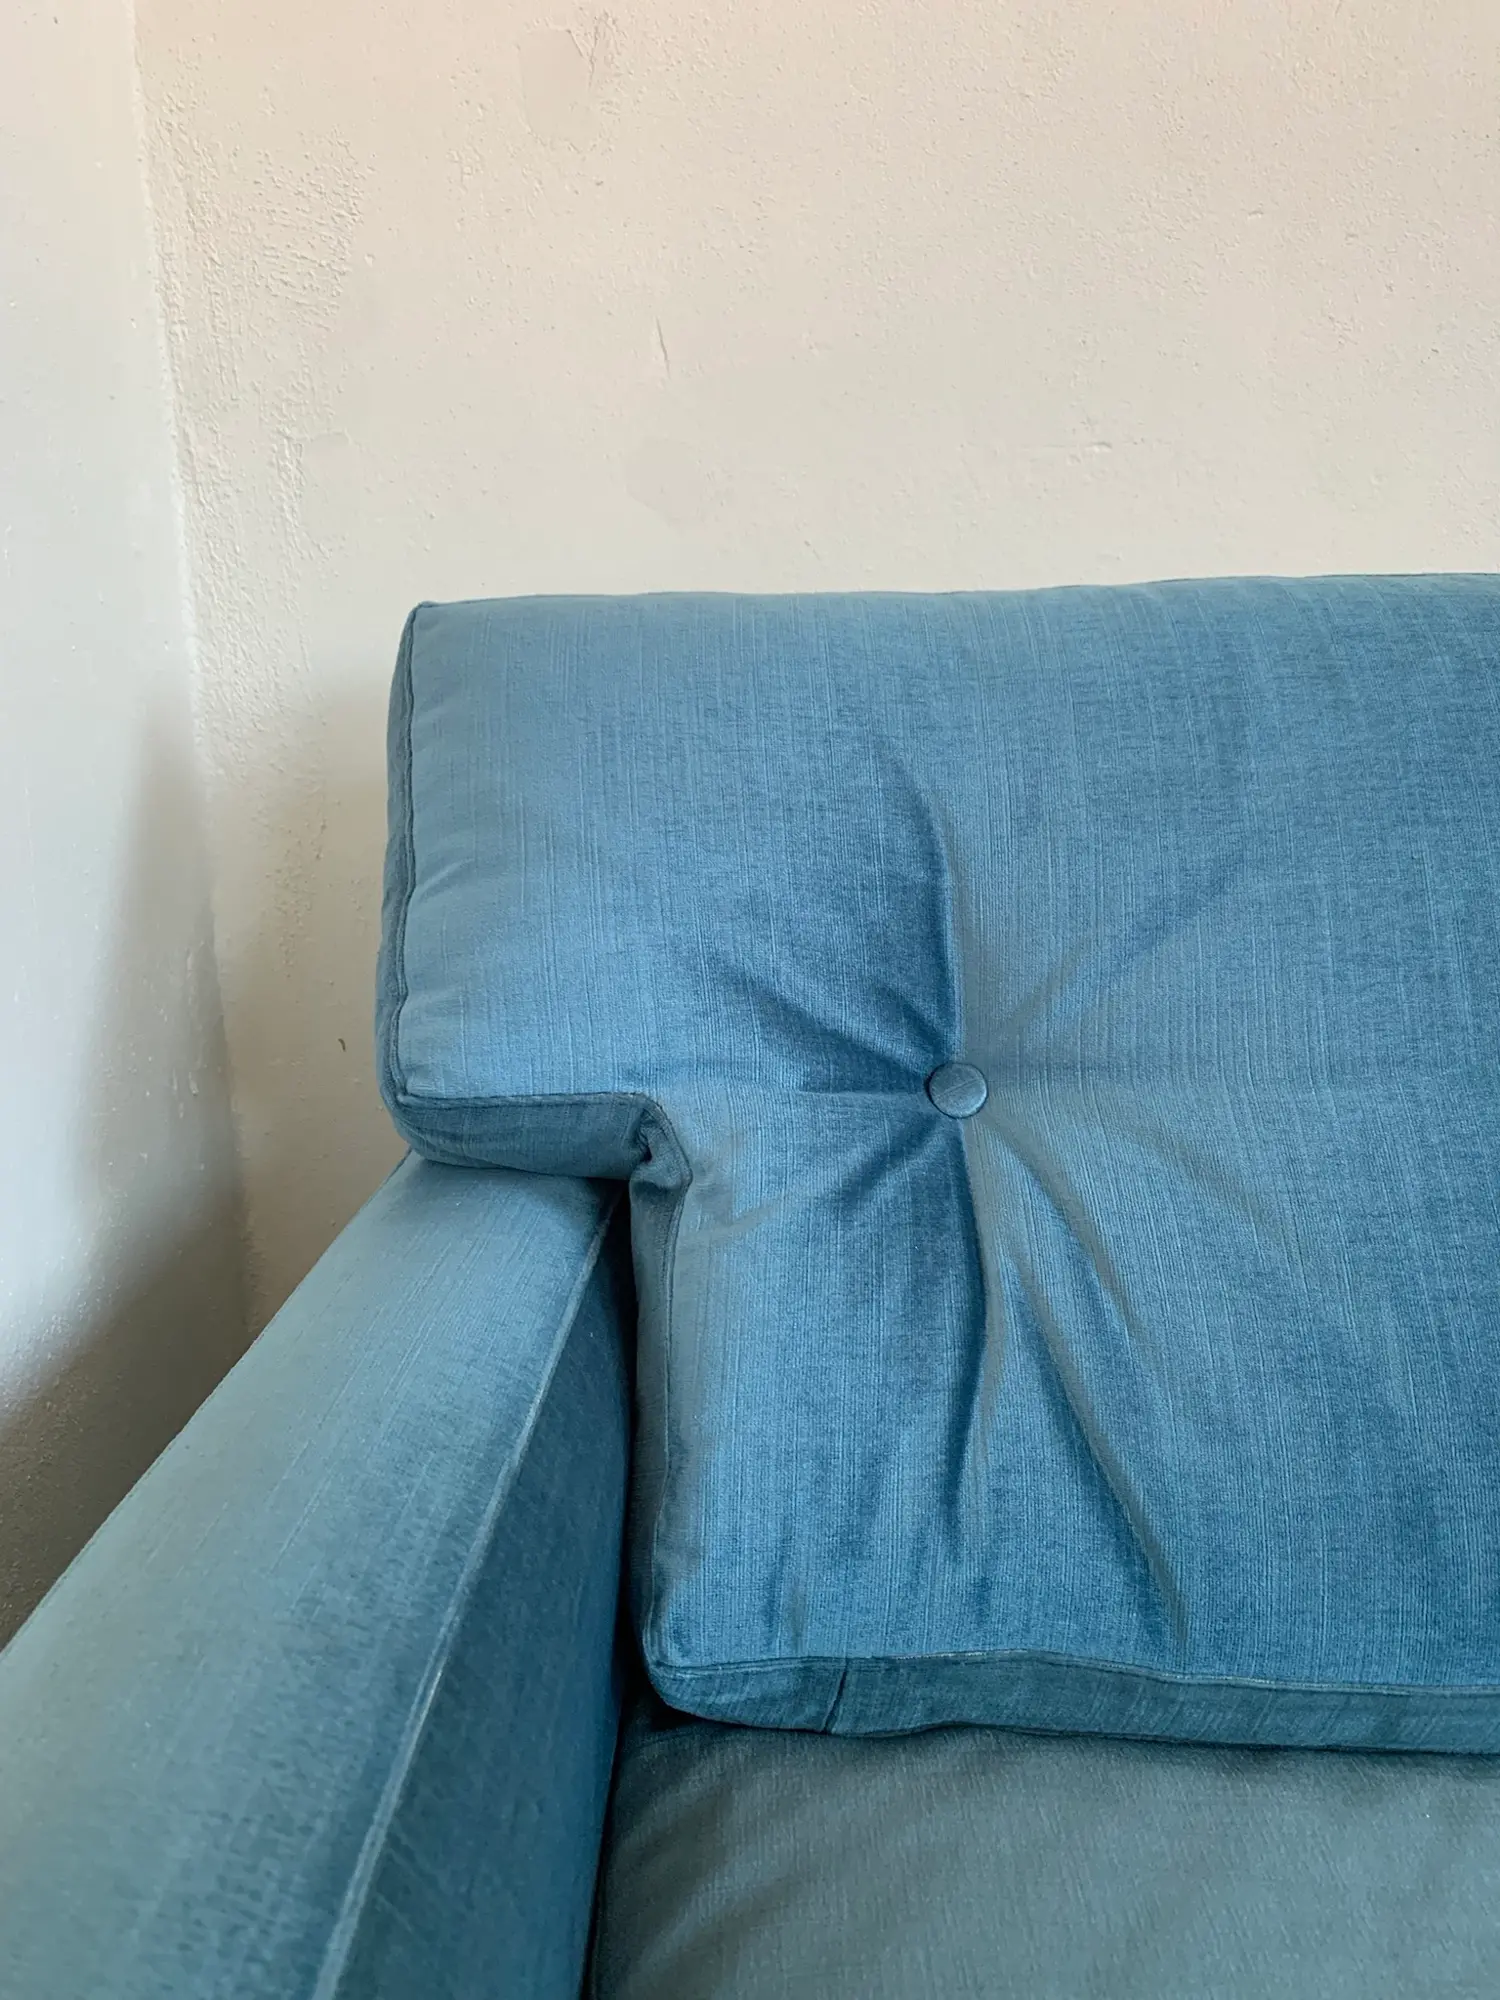 3-personers sofa